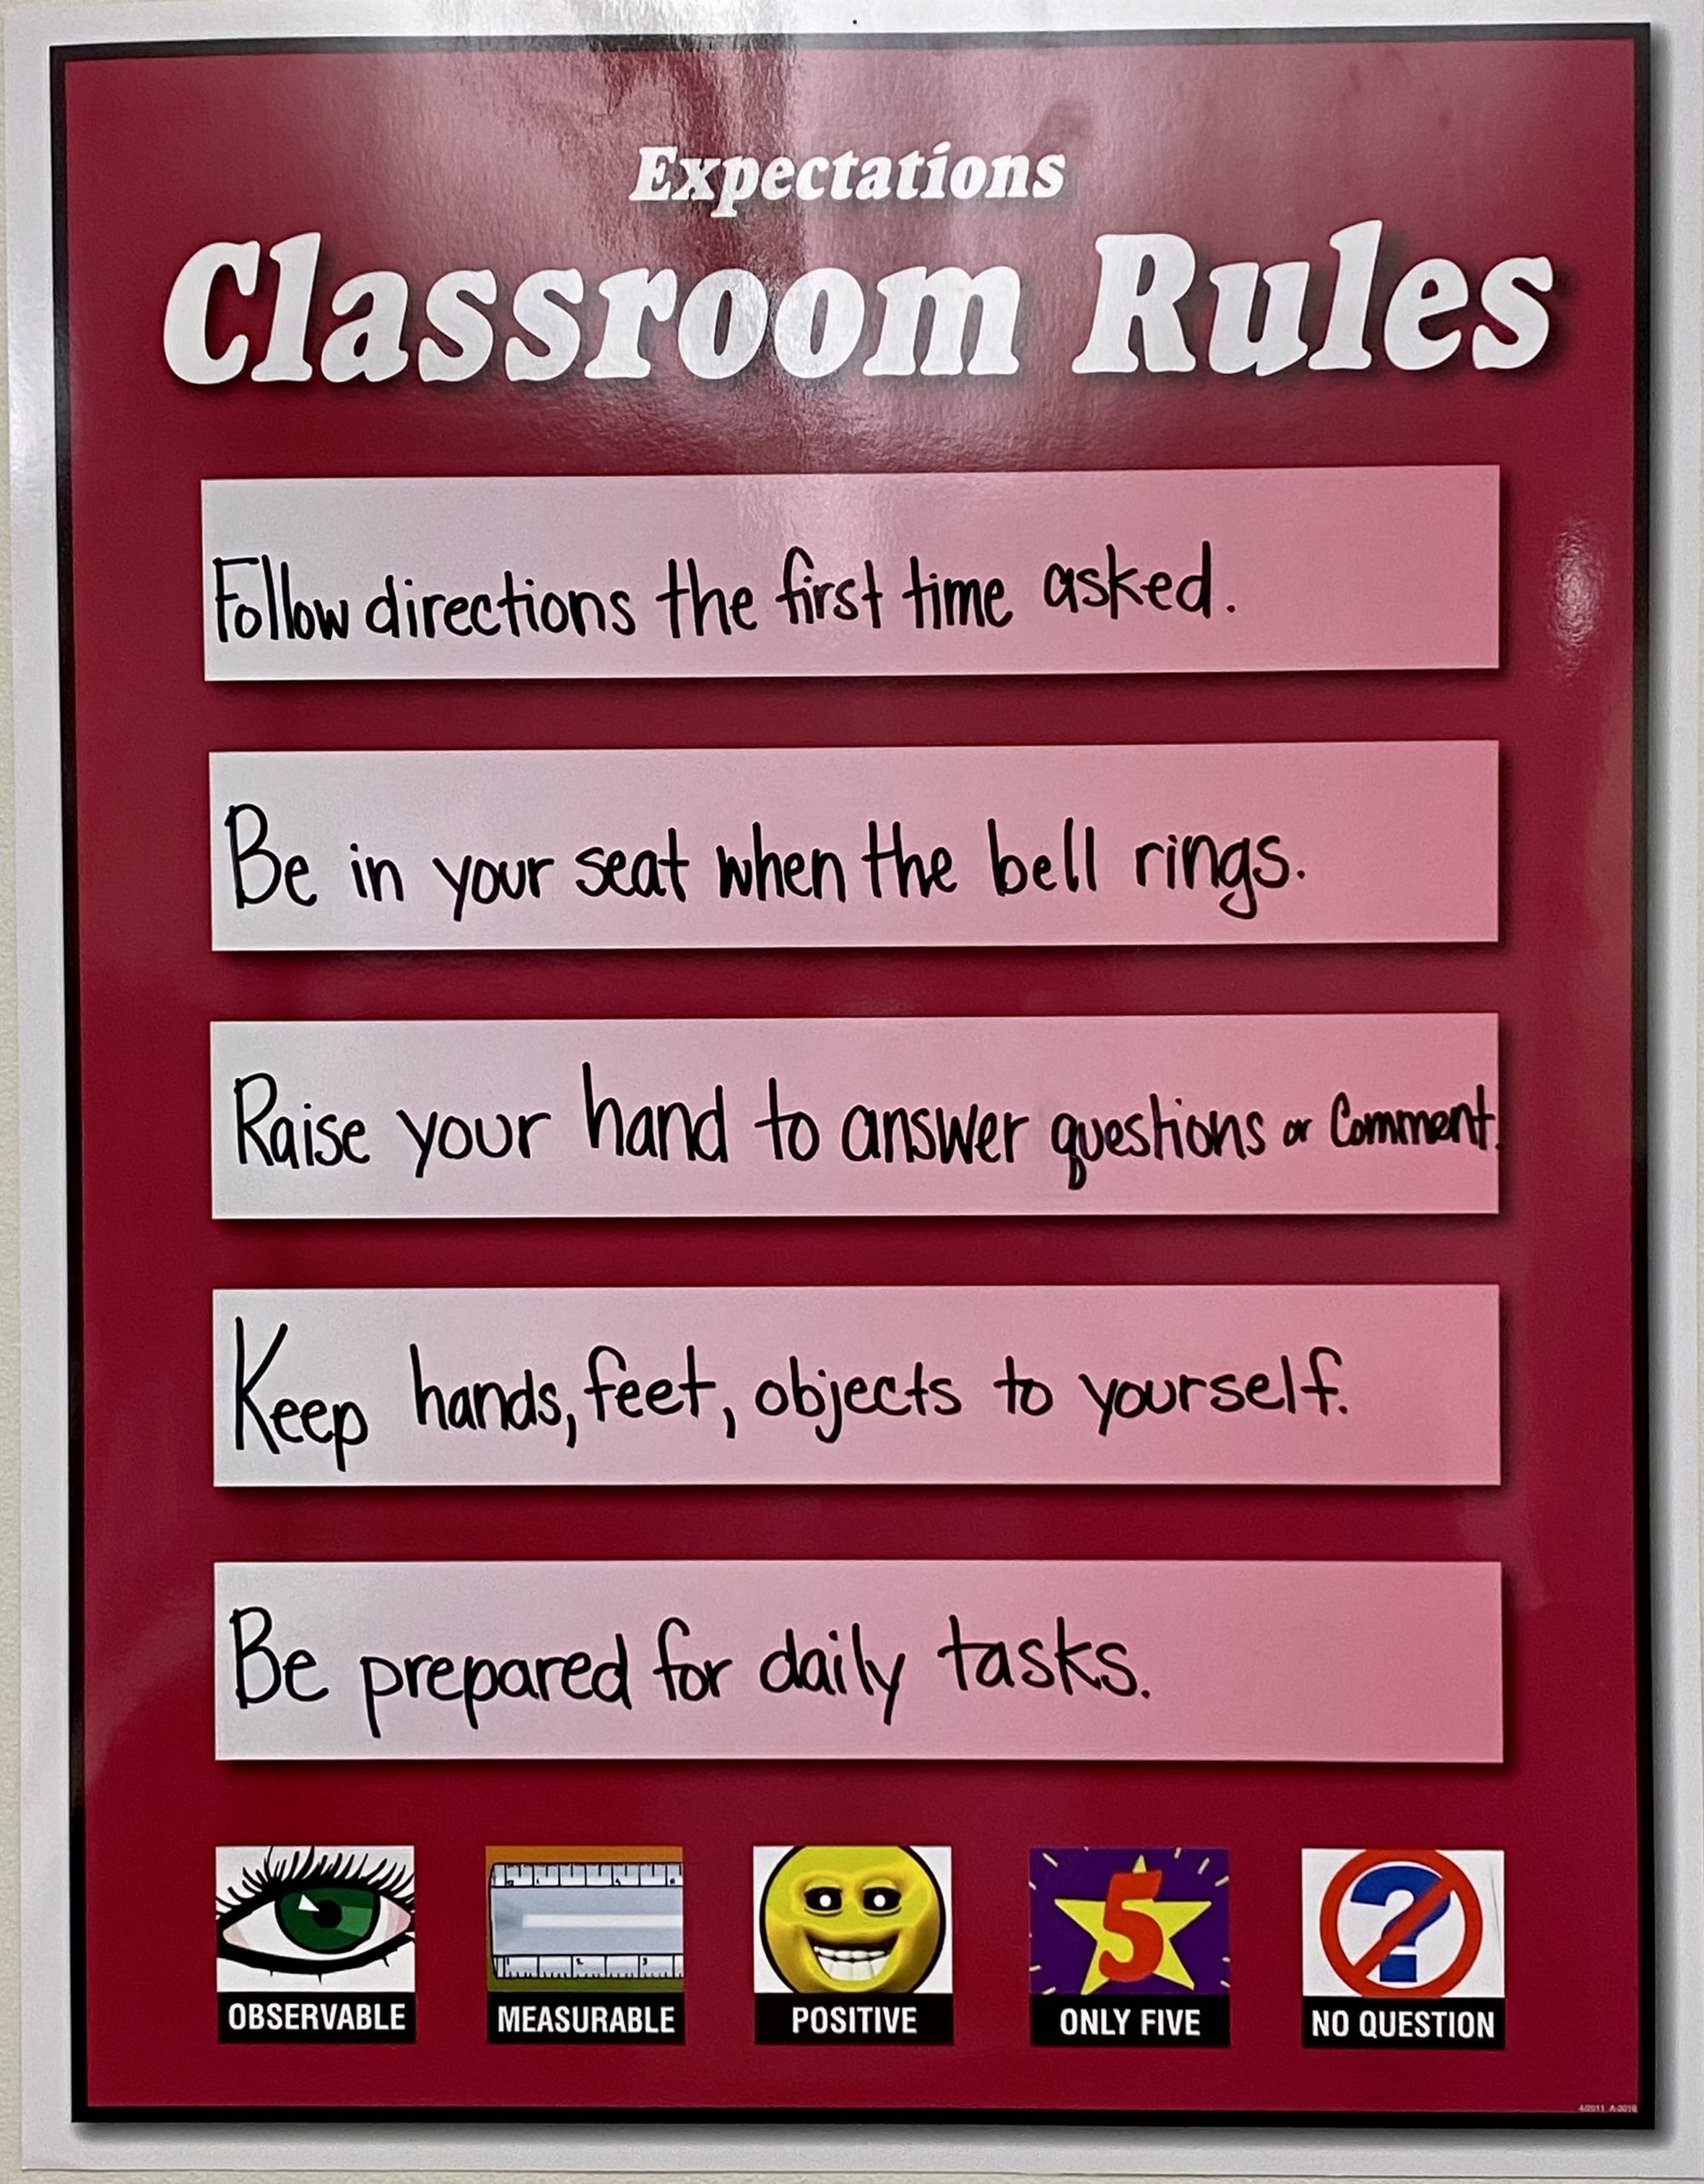 Classroom Rules 